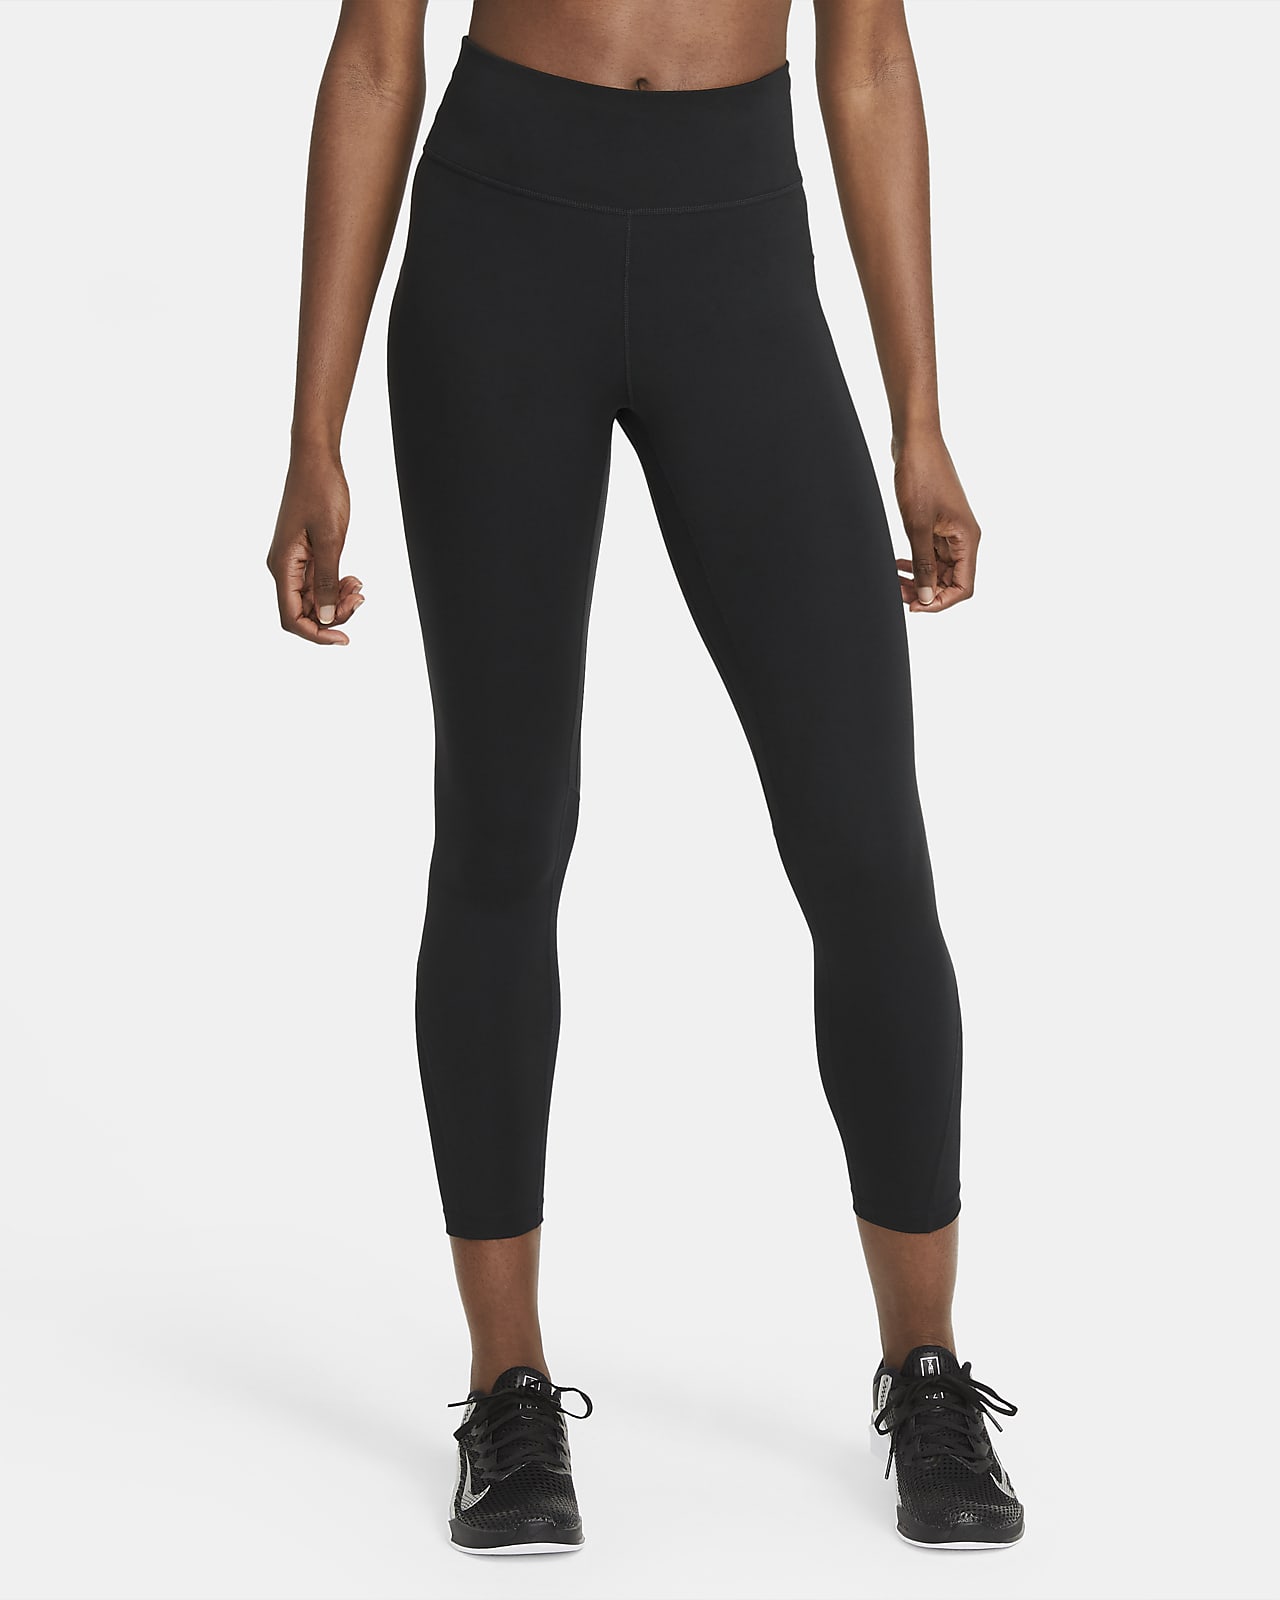 Nike One Plus Size Mid-Rise Camo-Print Leggings Black Gray Size 2X